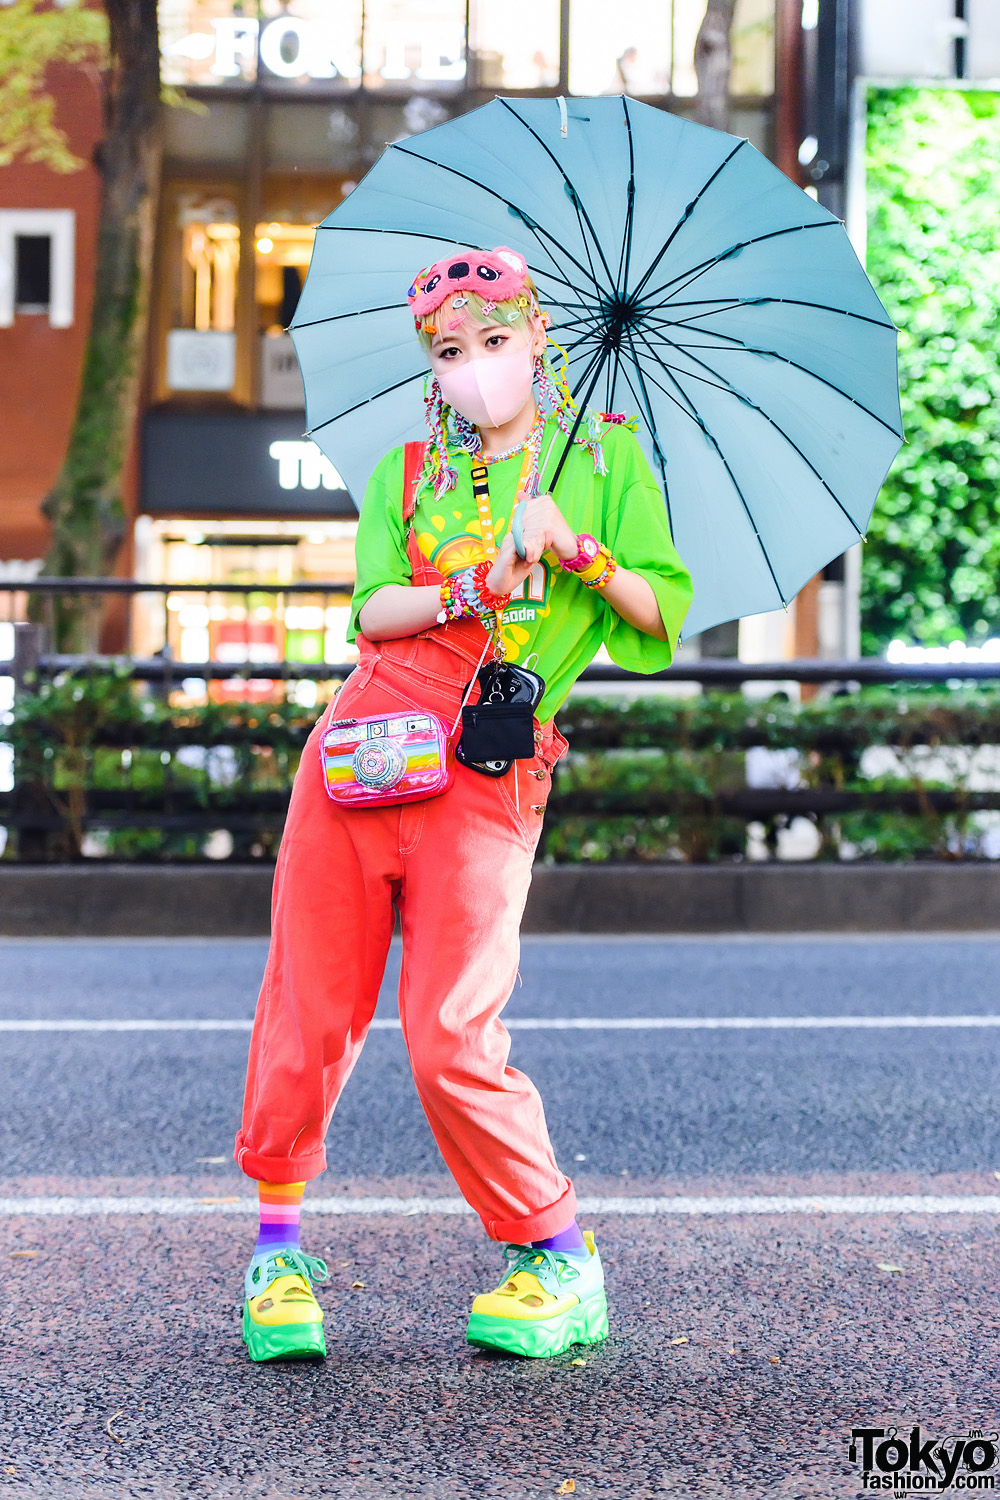 Kawaii Harajuku Street Style w/ Yarn Hair Falls, Mask, Umbrella, Resale, Cuffed Overalls, Claire's Camera Bag & Yosuke Platforms